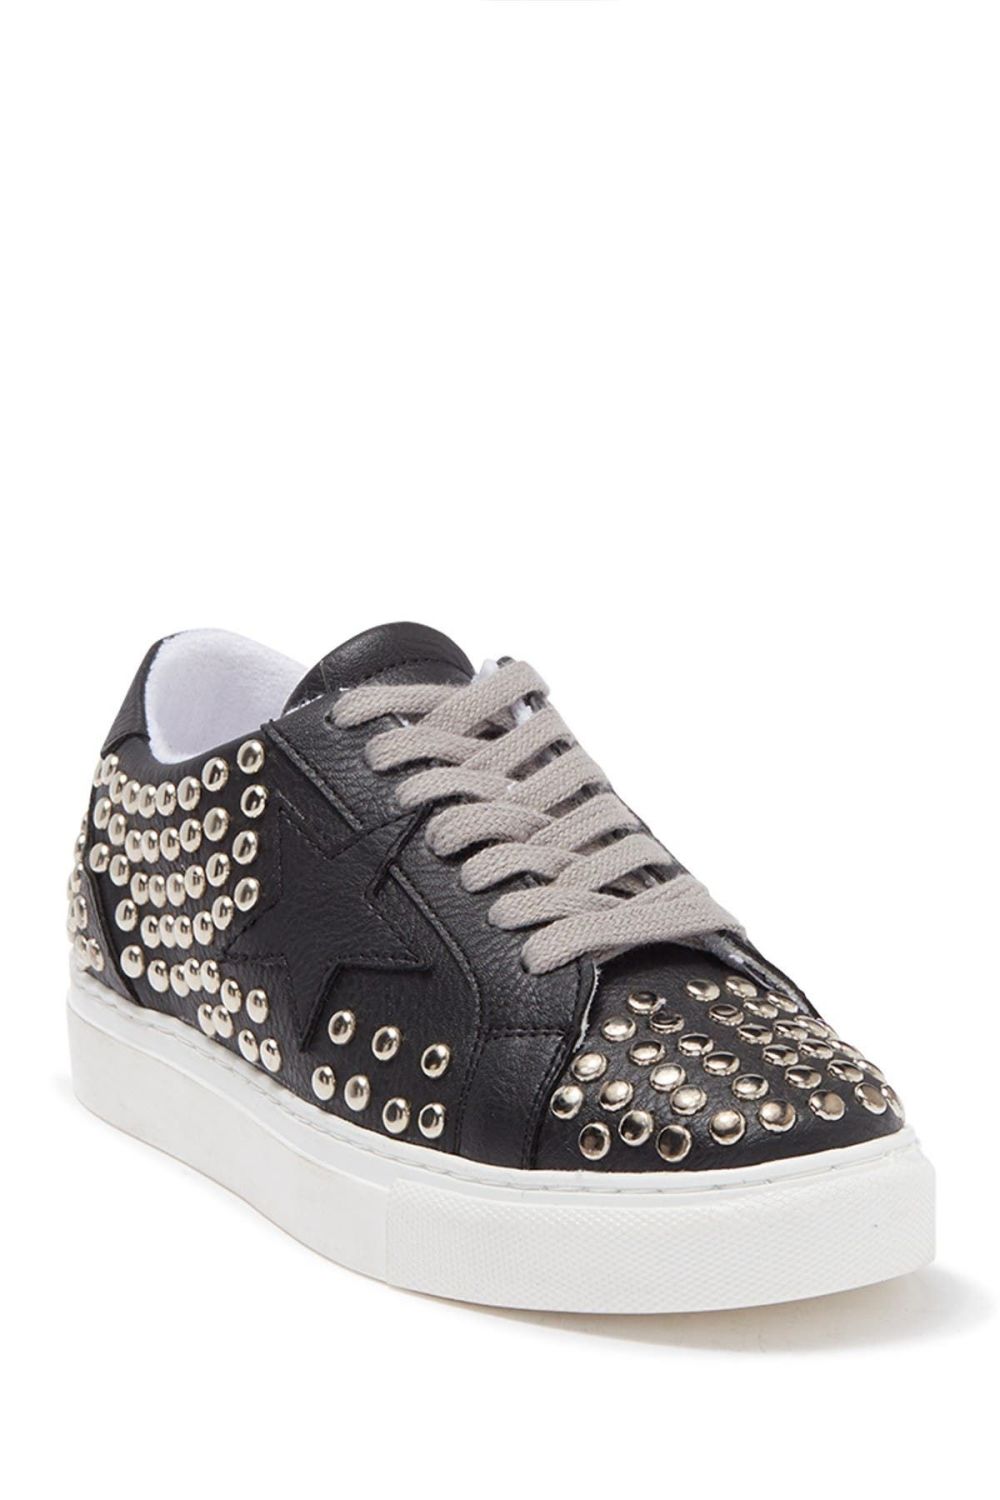 Steven Phunky Metallic Embellishments Sneaker Size: 5.5